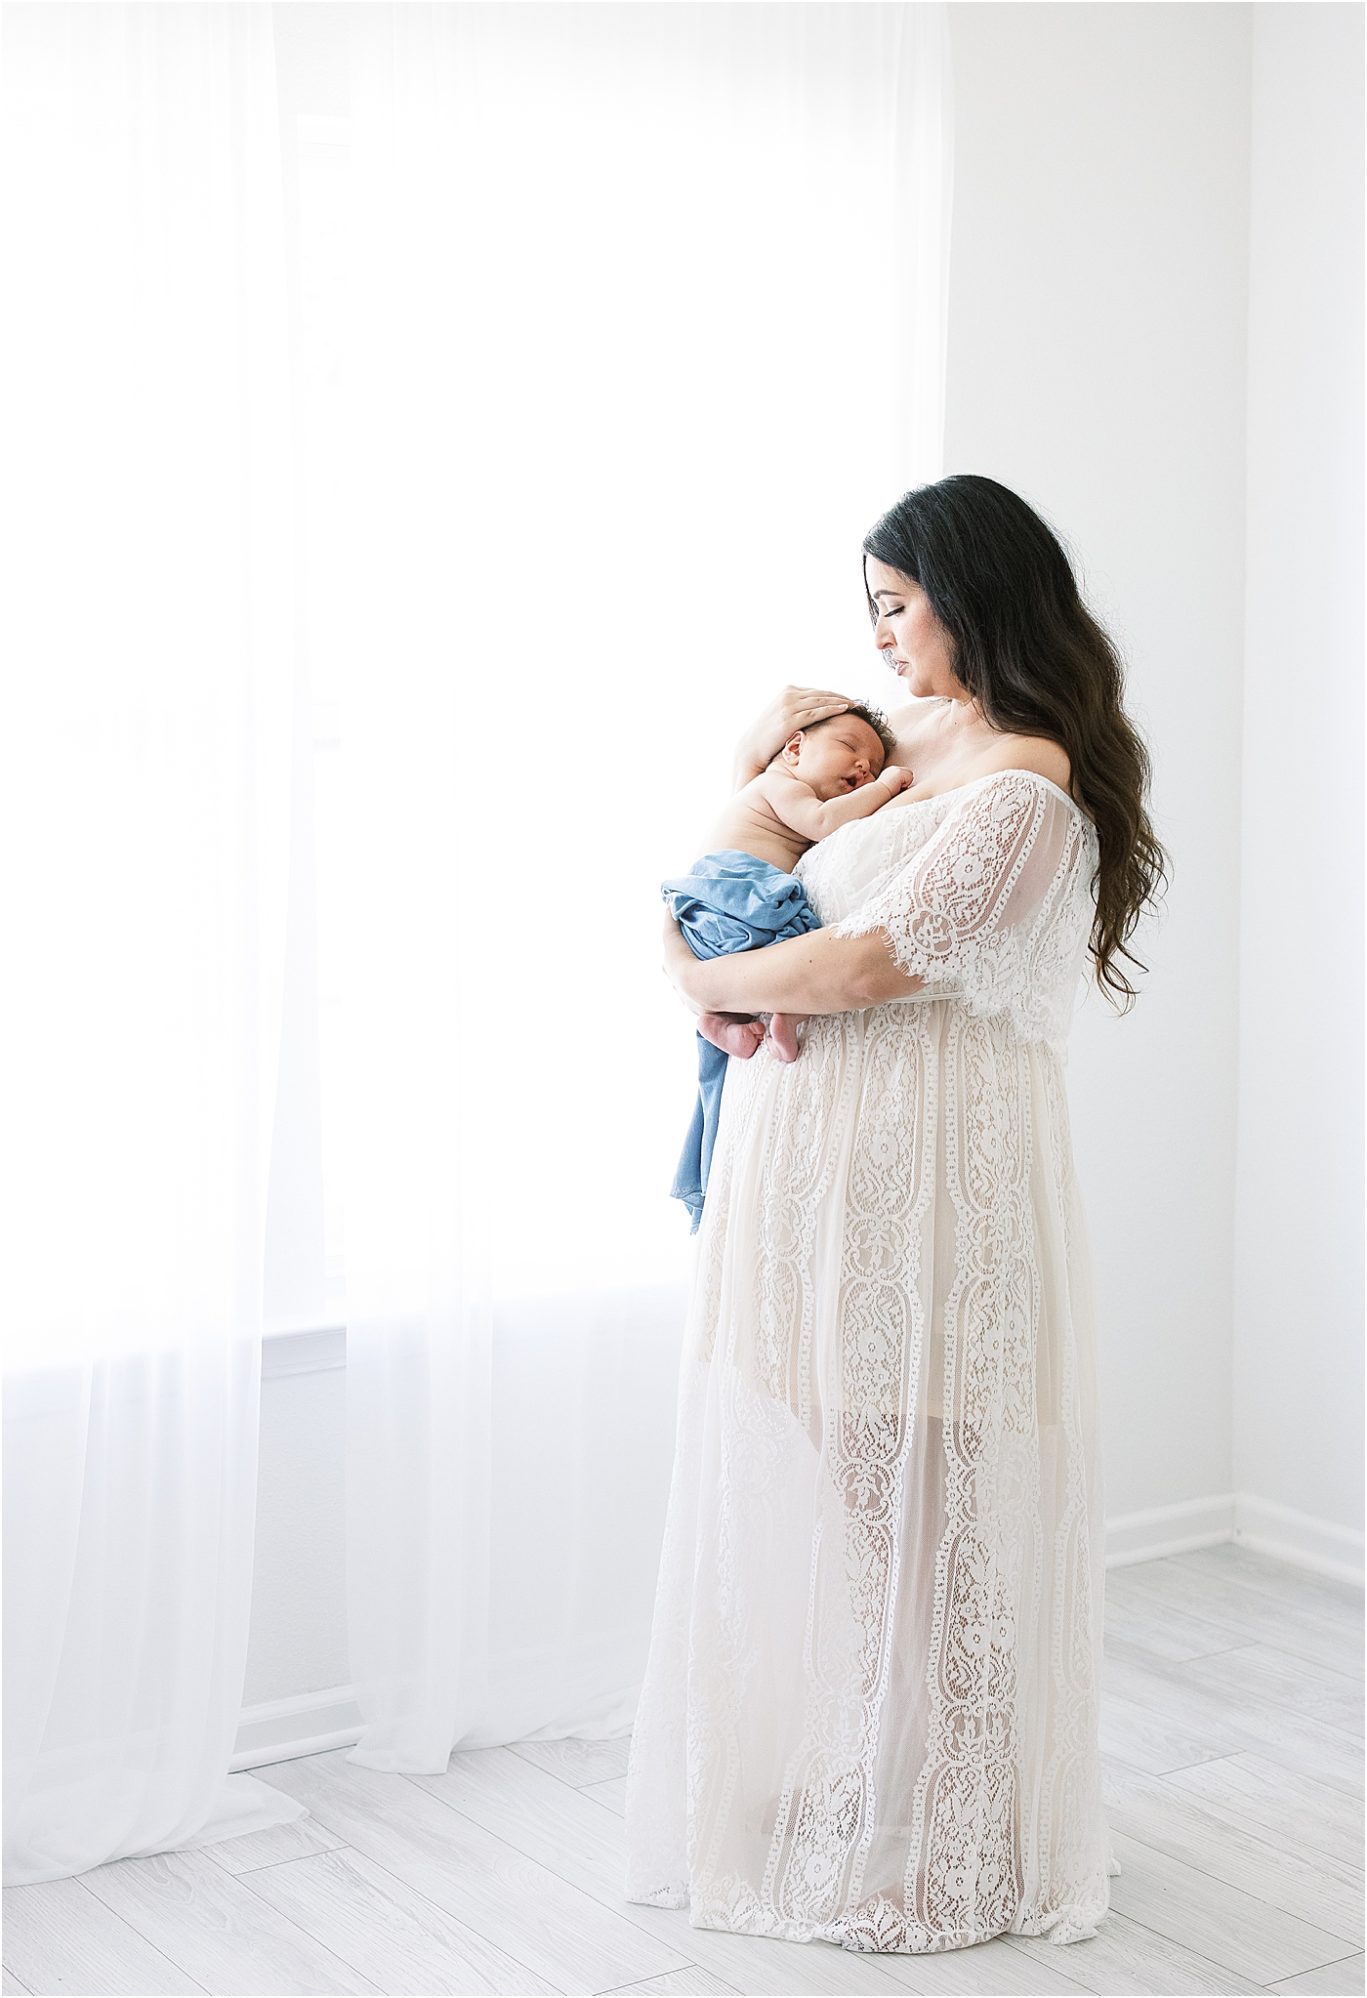 Mom holding her newborn son | Lindsay Konopa Photography